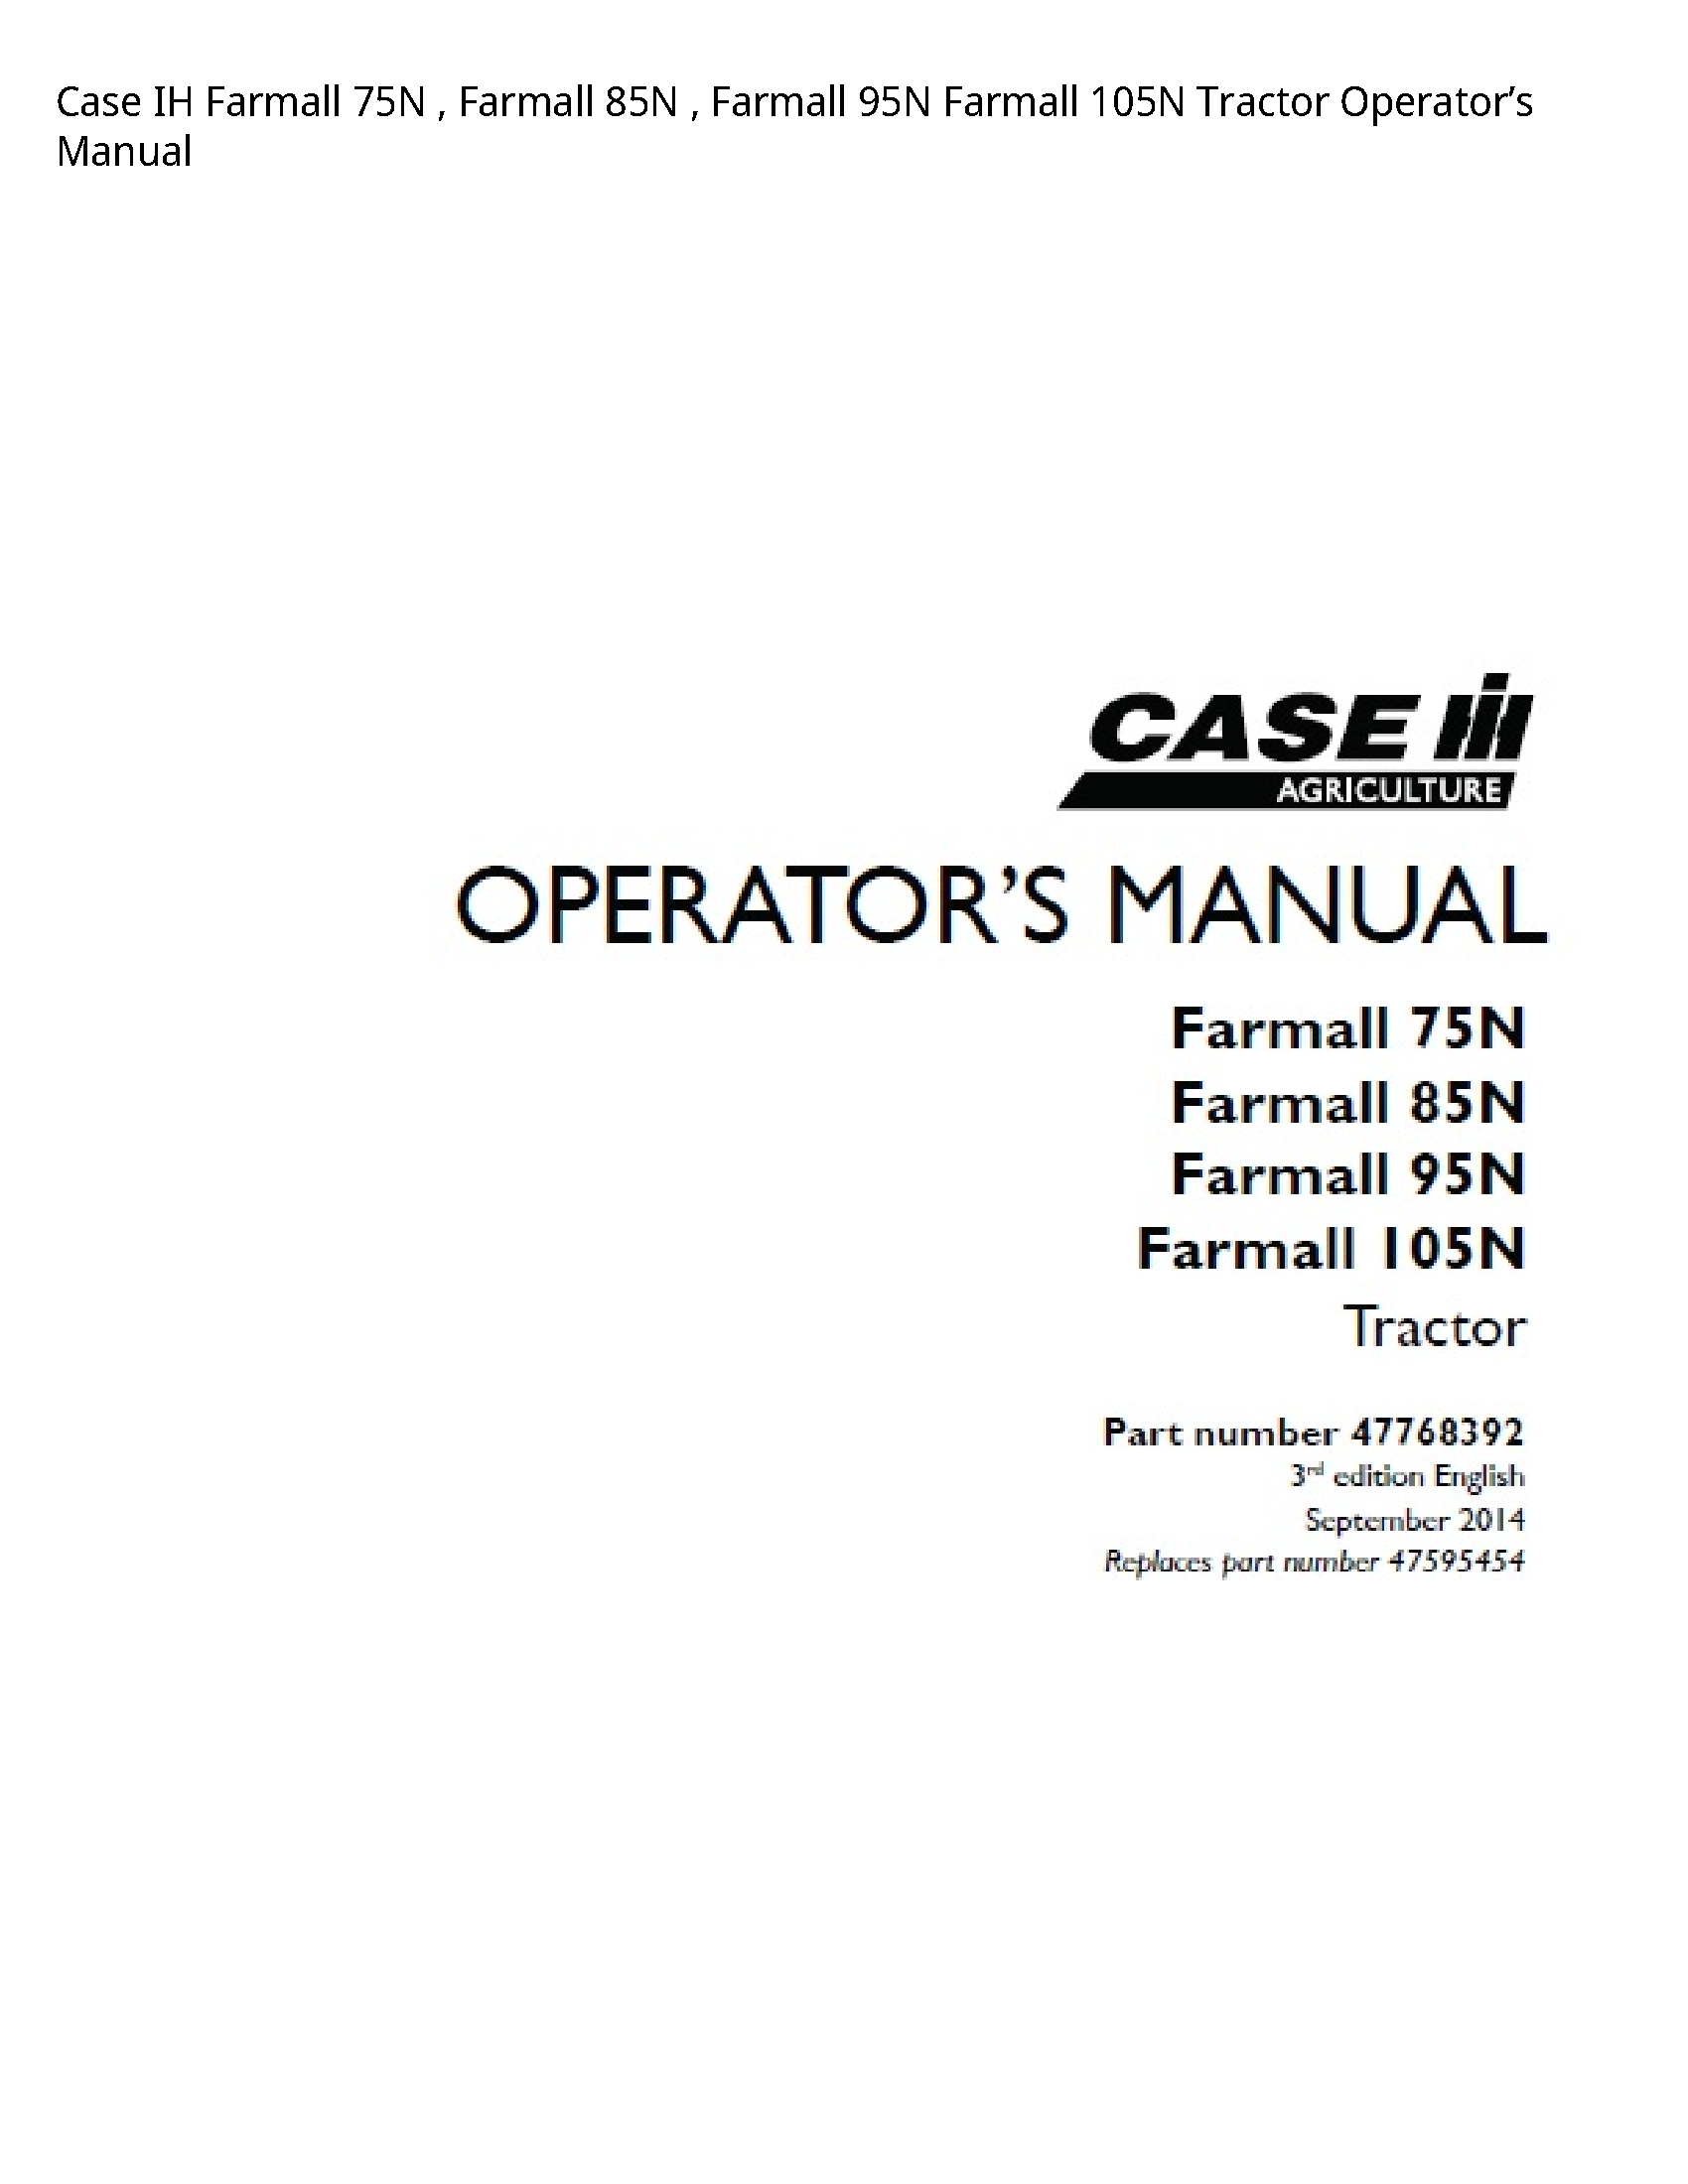 Case/Case IH 75N IH Farmall Farmall Farmall Farmall Tractor Operator’s manual